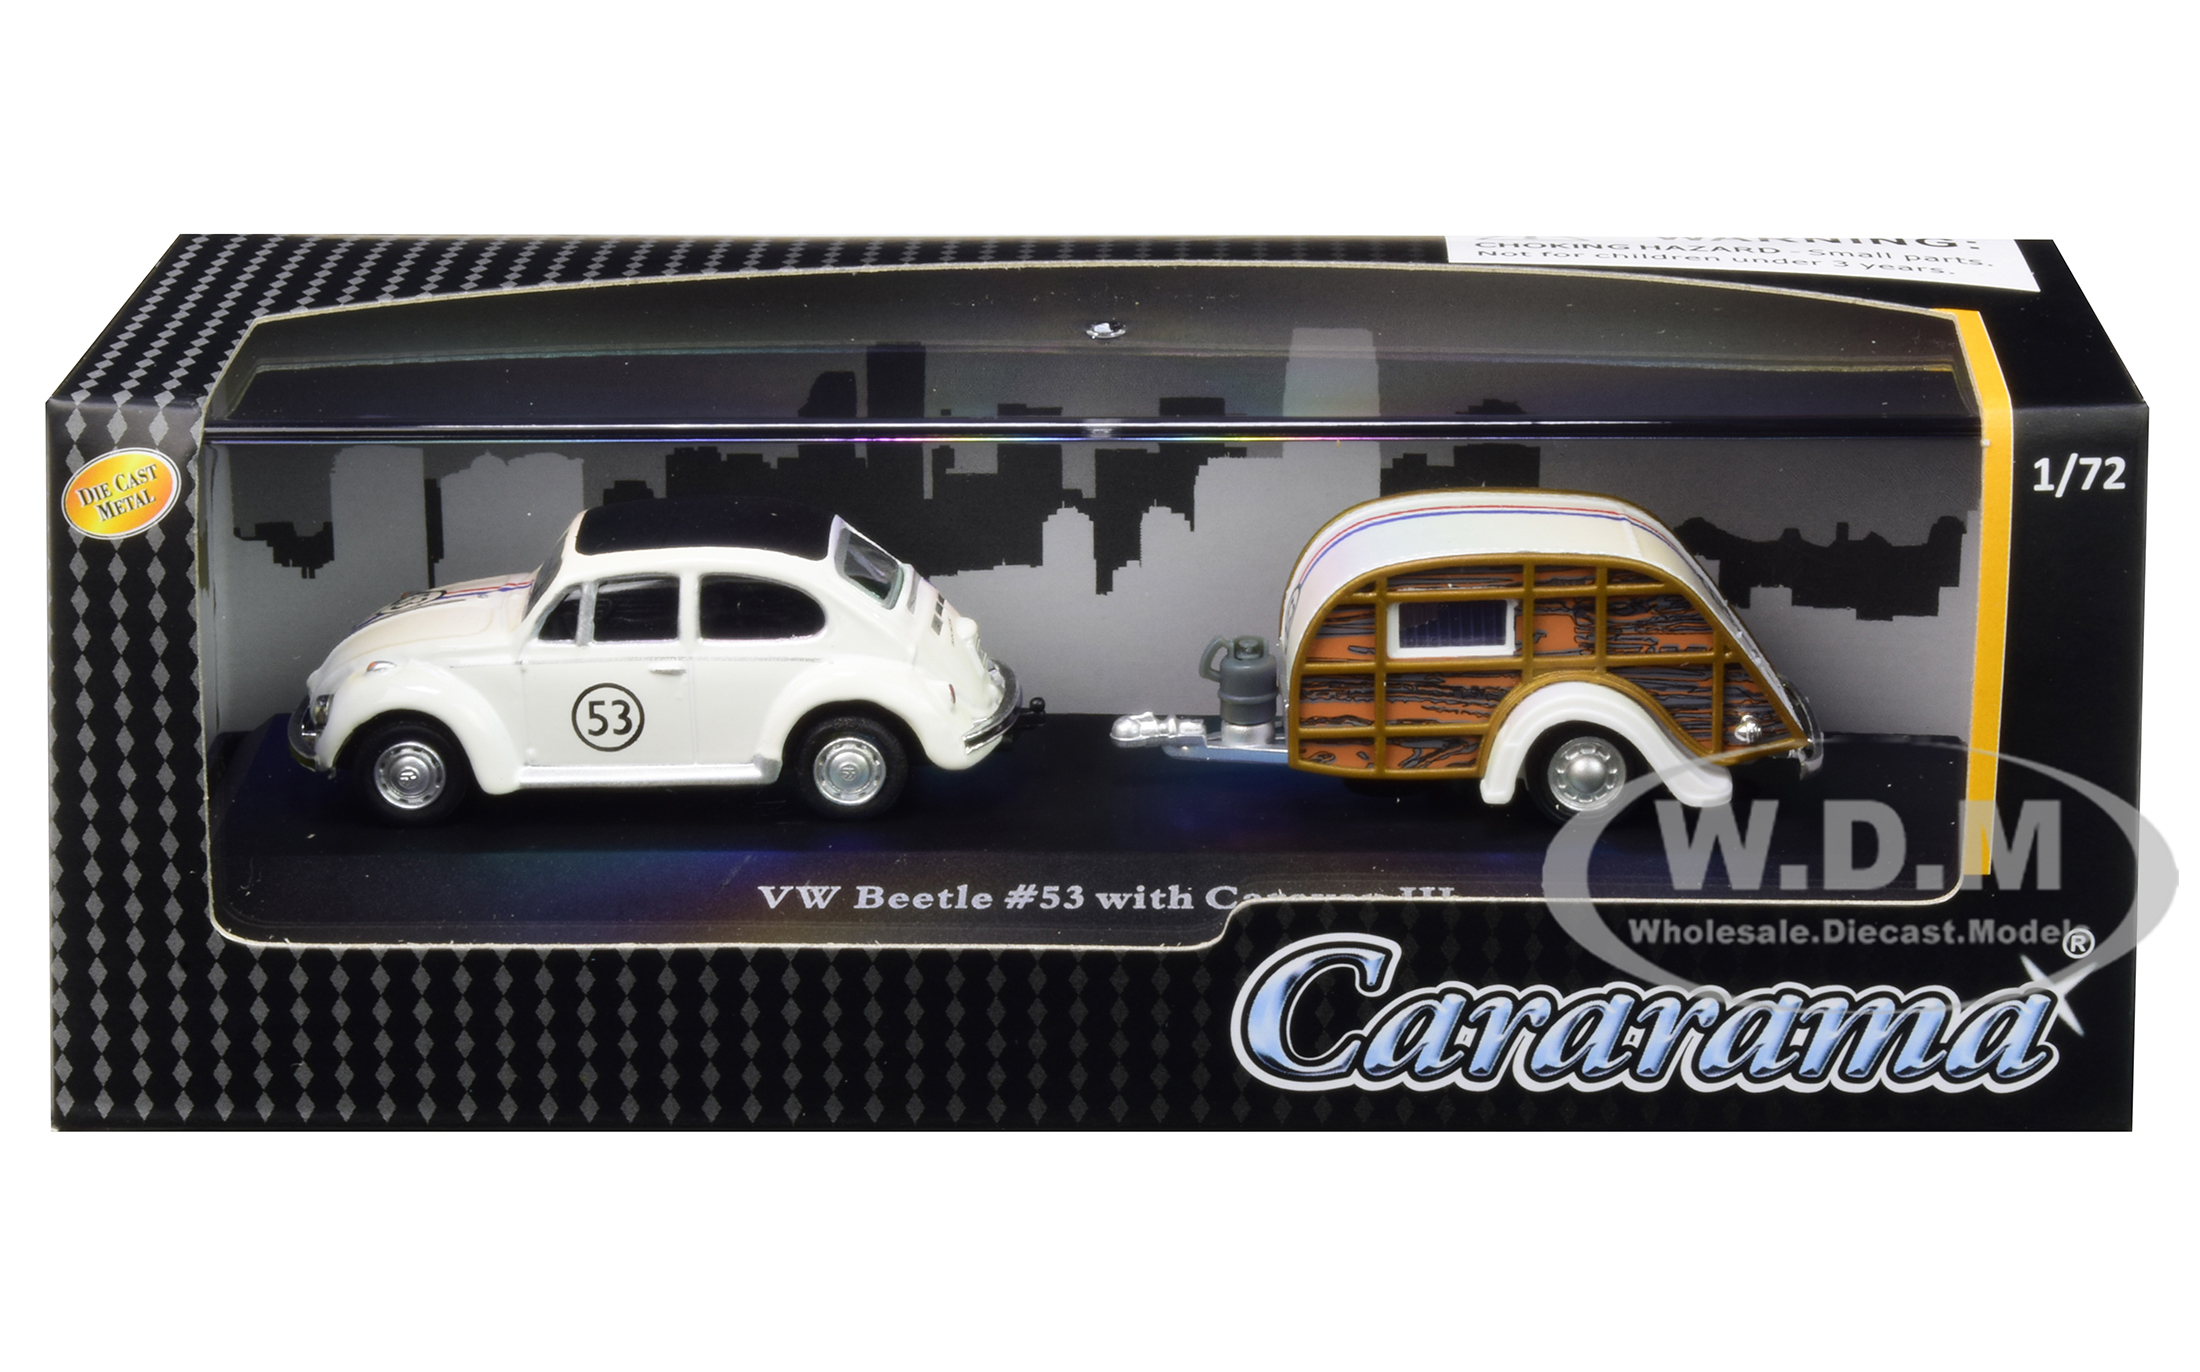 Volkswagen Beetle Racing 53 with Caravan III Travel Trailer in Display Showcase 1/72 Diecast Model Car by Cararama